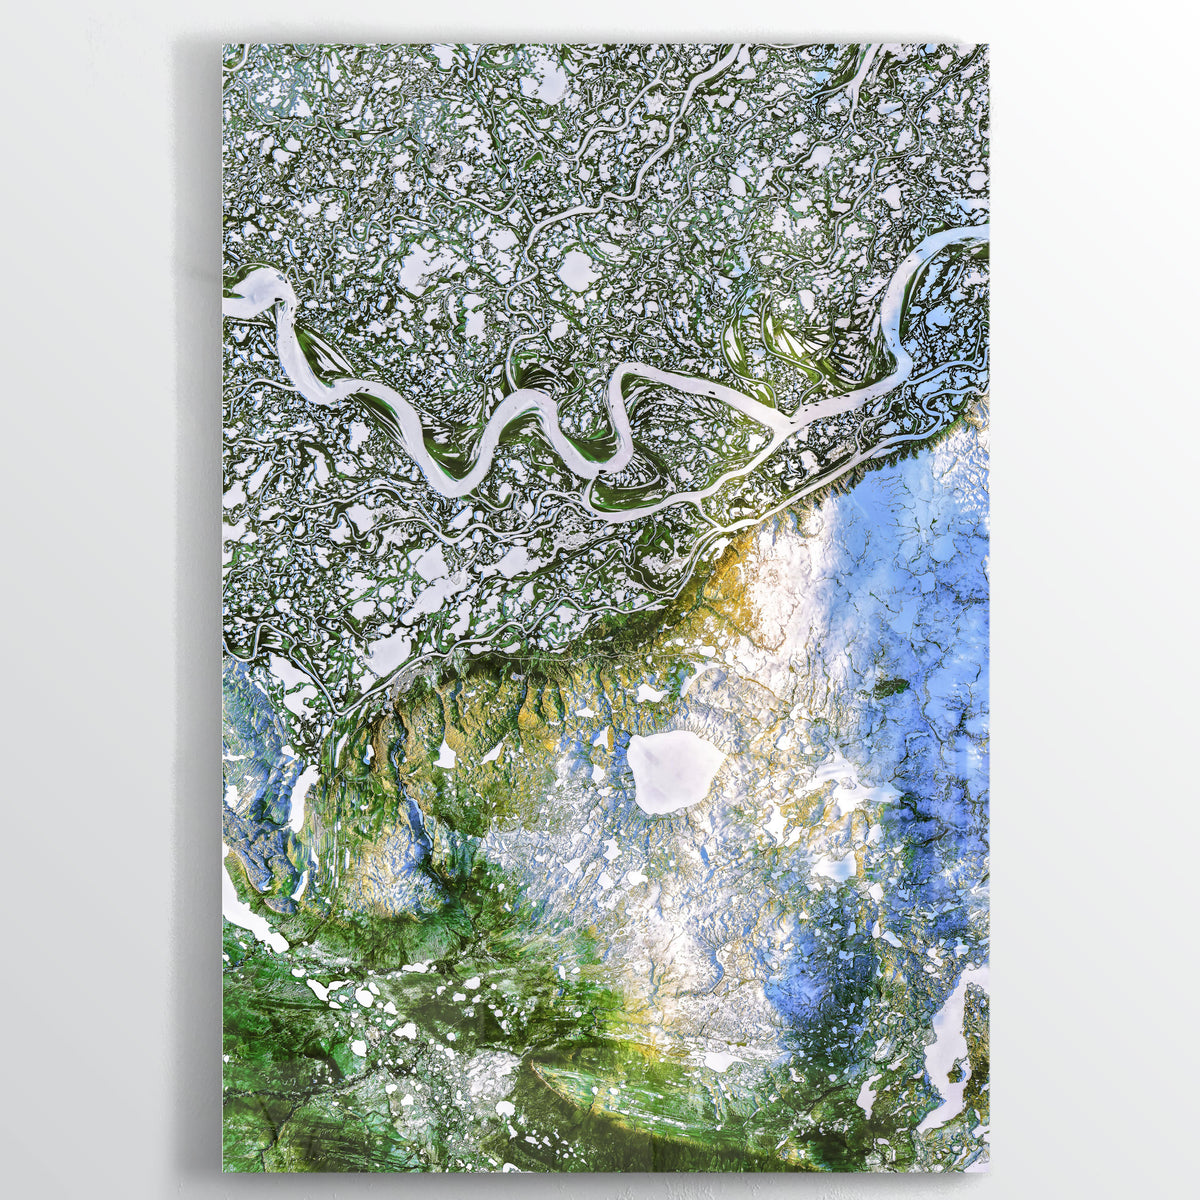 Mackenzie River Earth Photography - Floating Acrylic Art